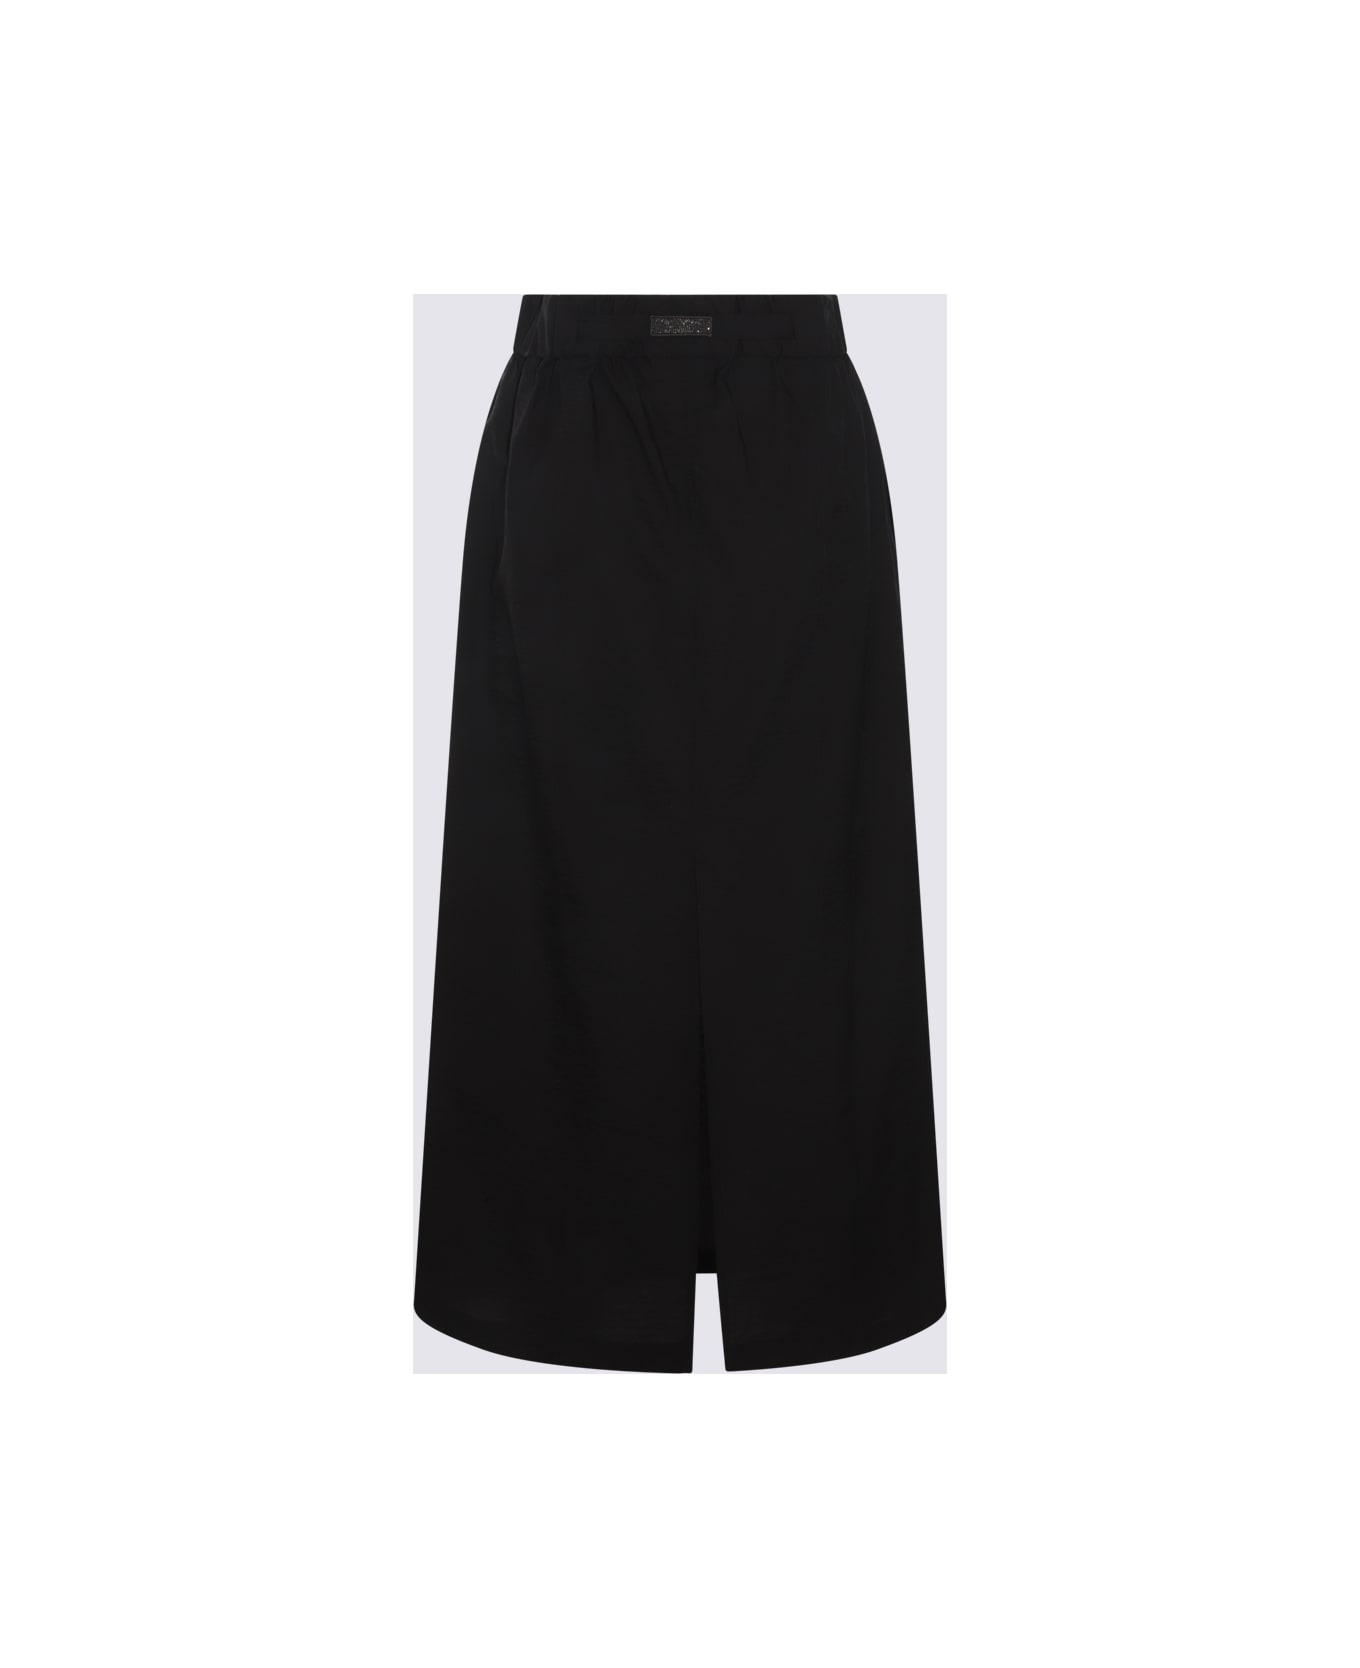 Brunello Cucinelli Black Cotton Blend Skirt - Black